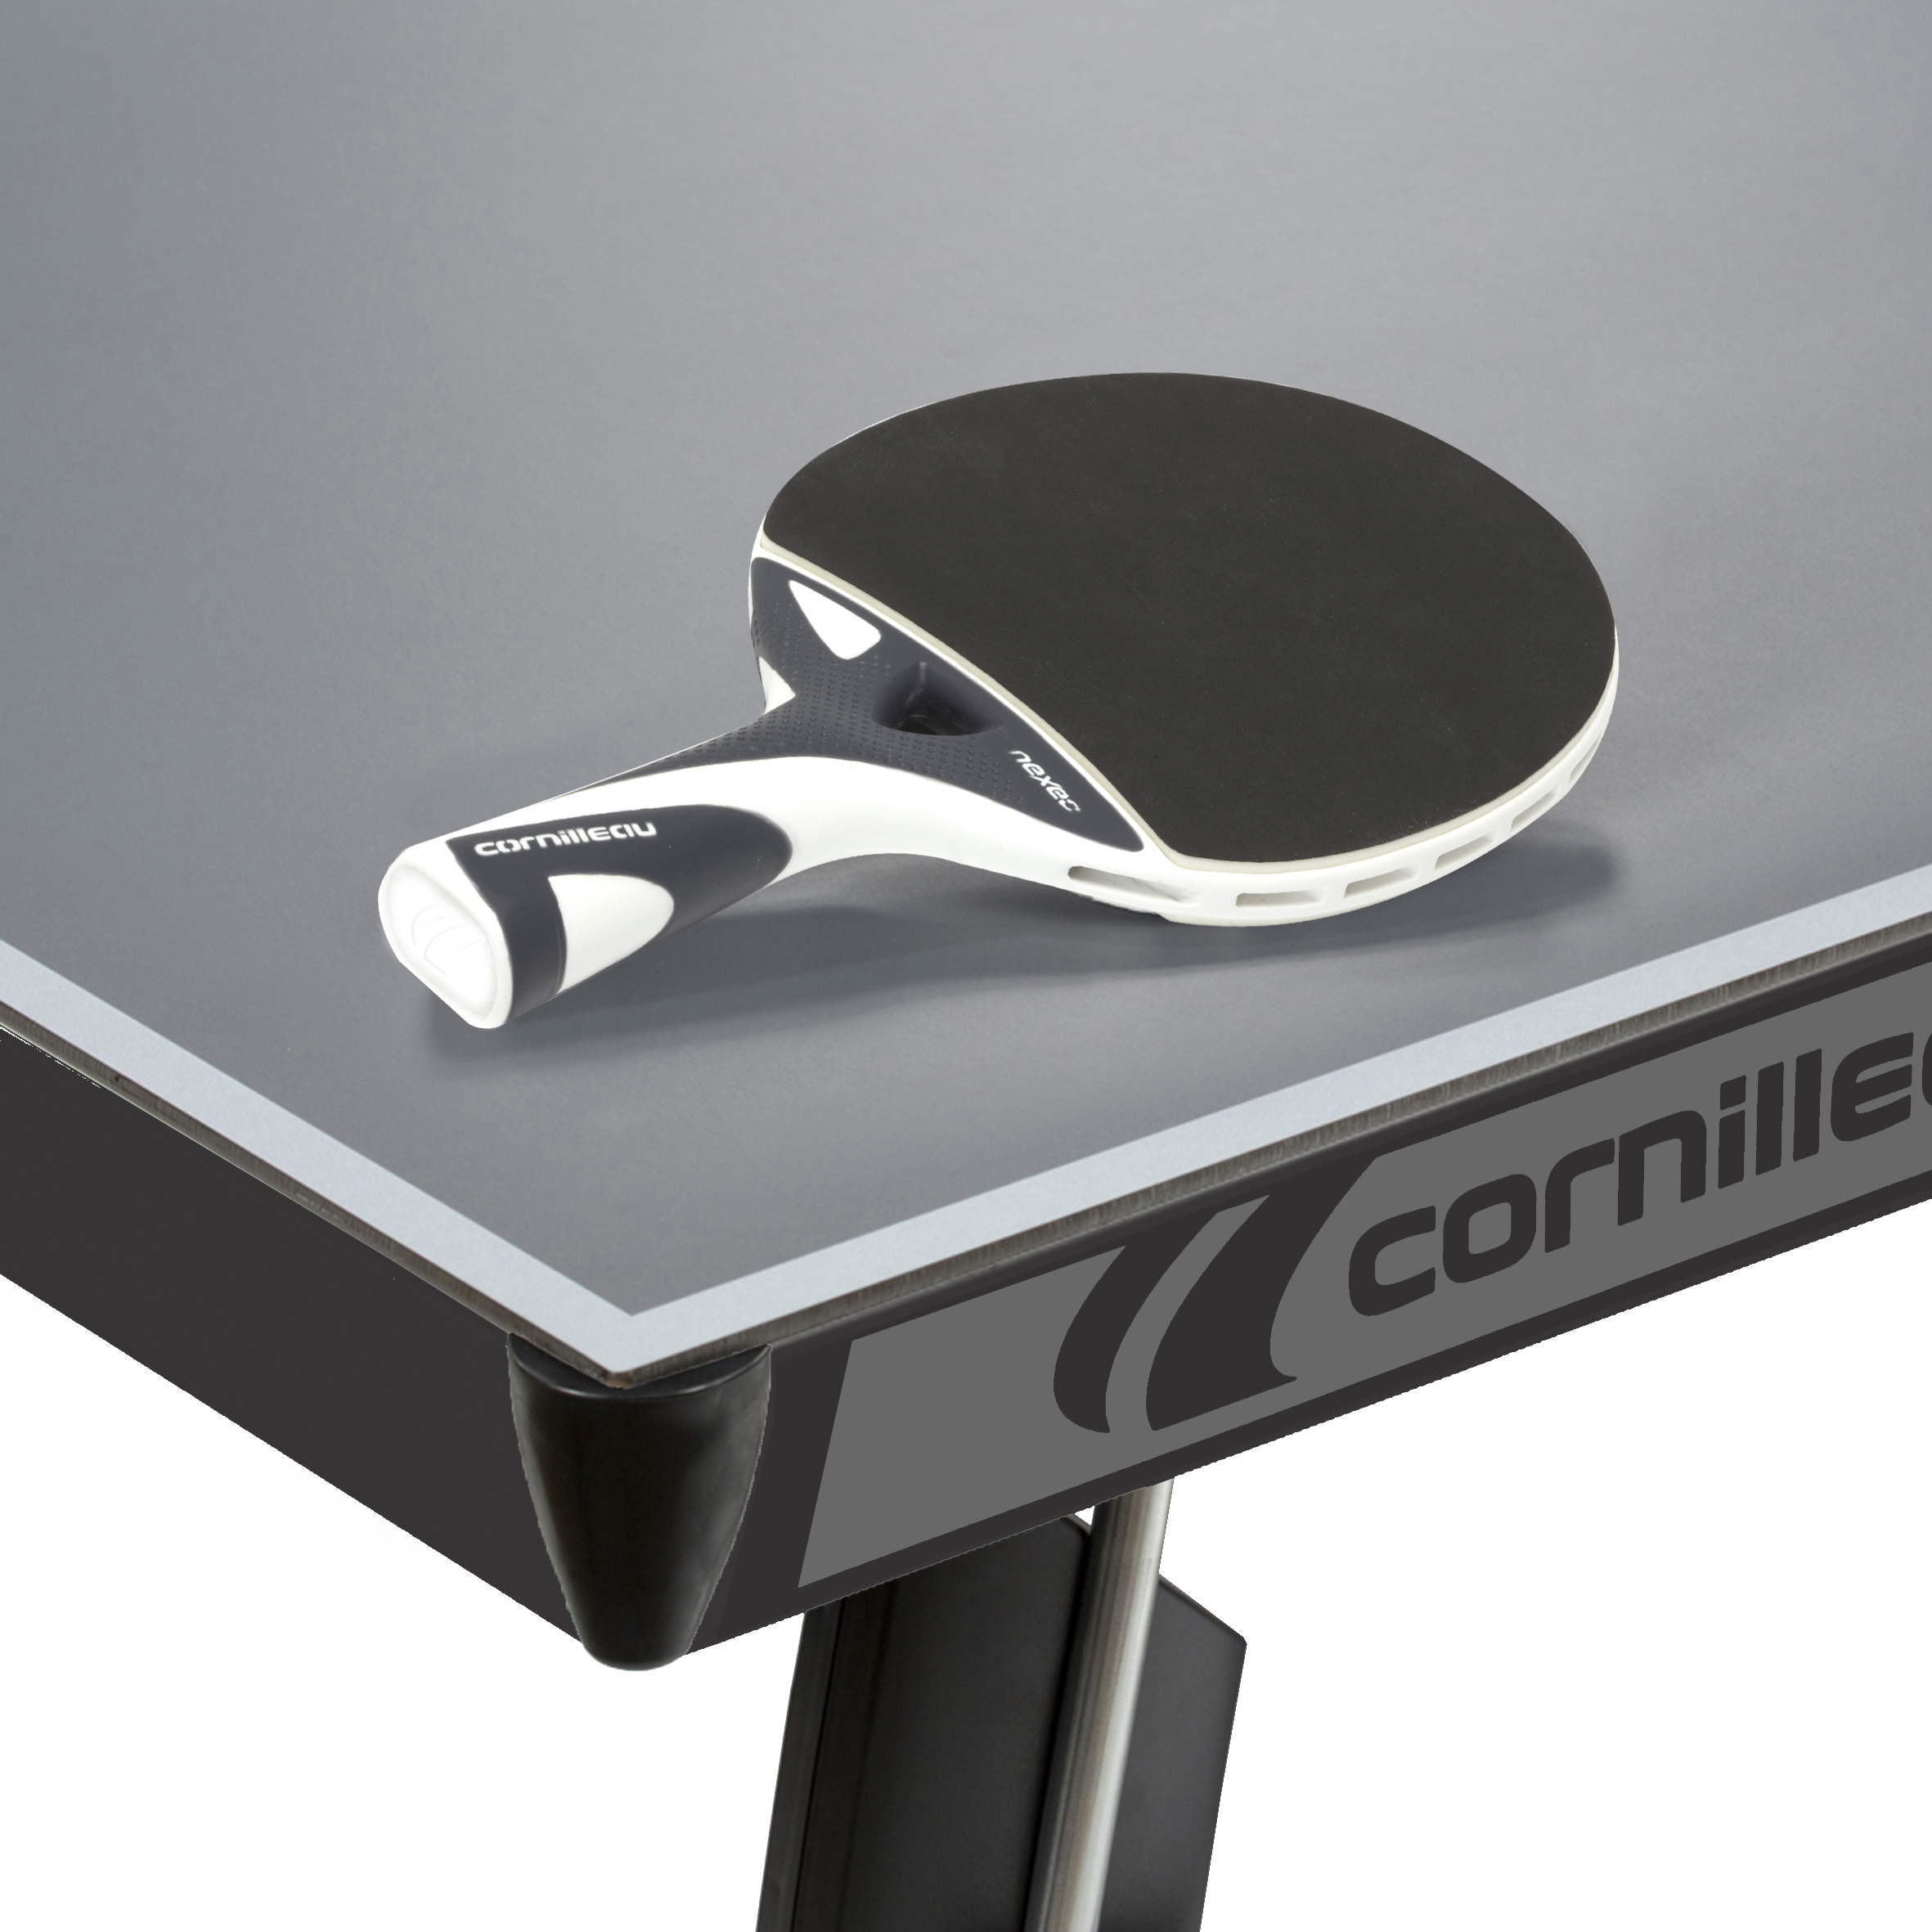 Cornilleau Black Code Outdoor Table Tennis Table - eFamilyFun